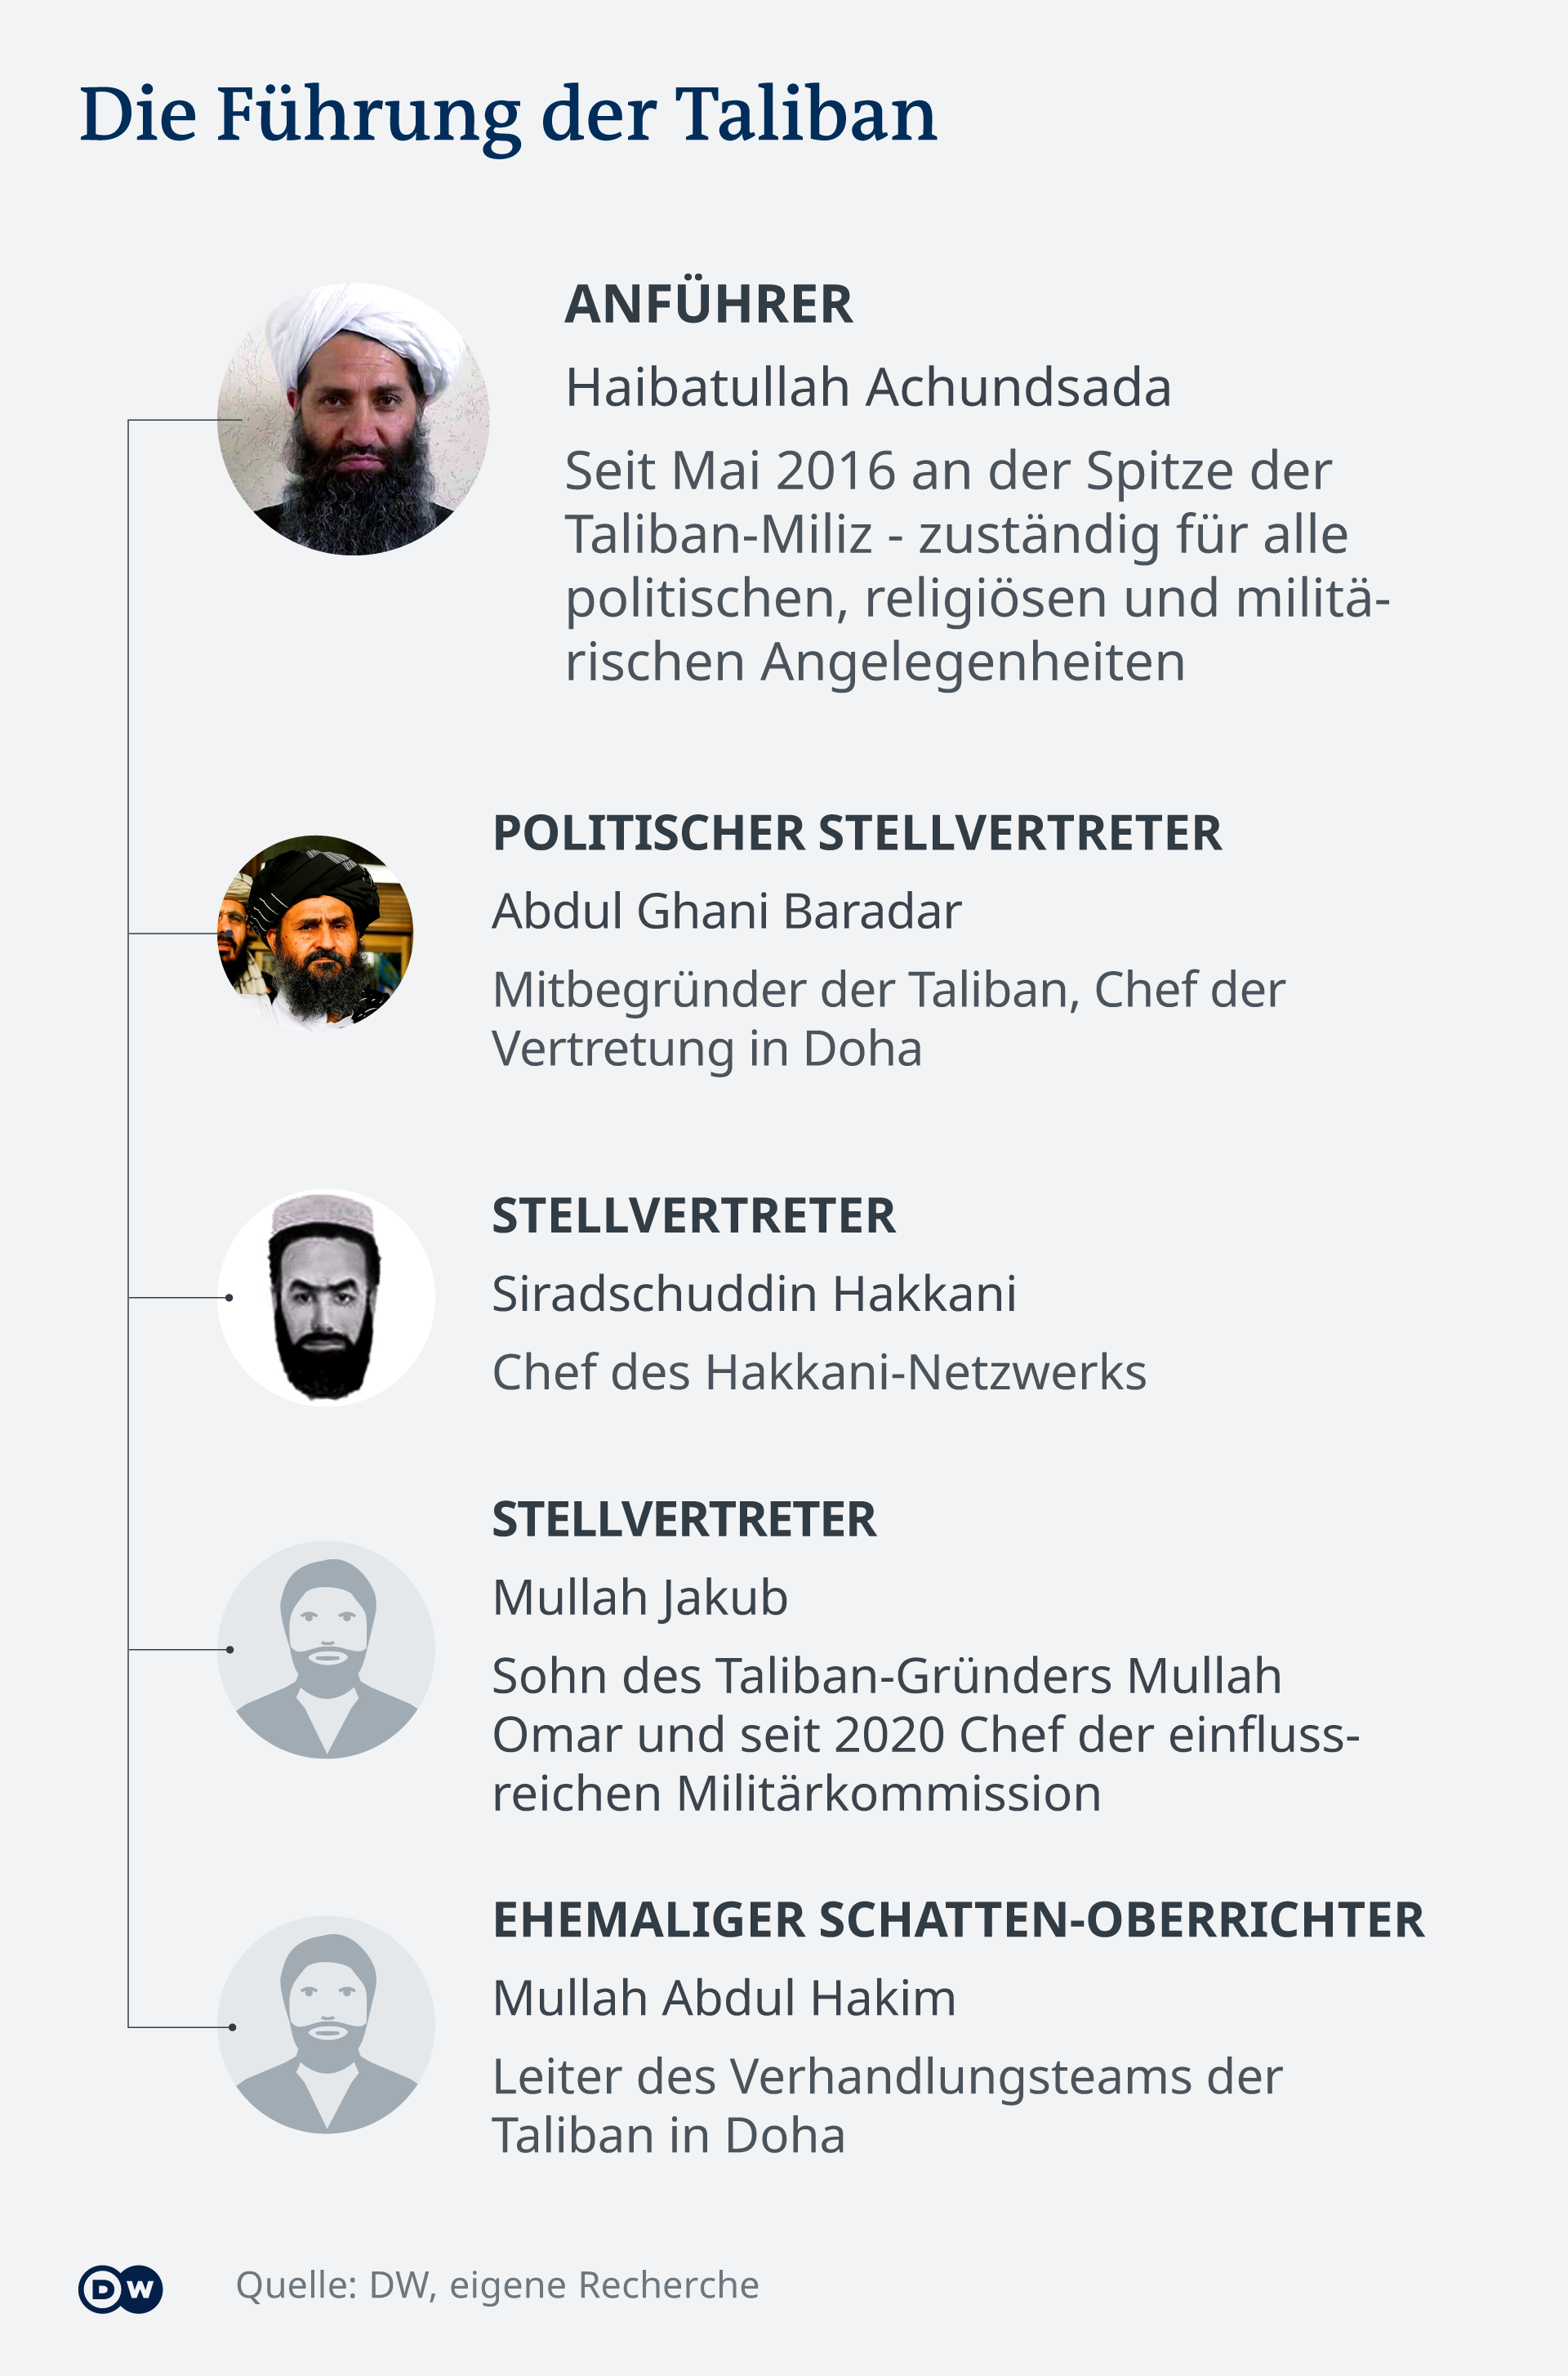 Führungsstruktur der Taliban in Afghanistan. (Grafik: DW)